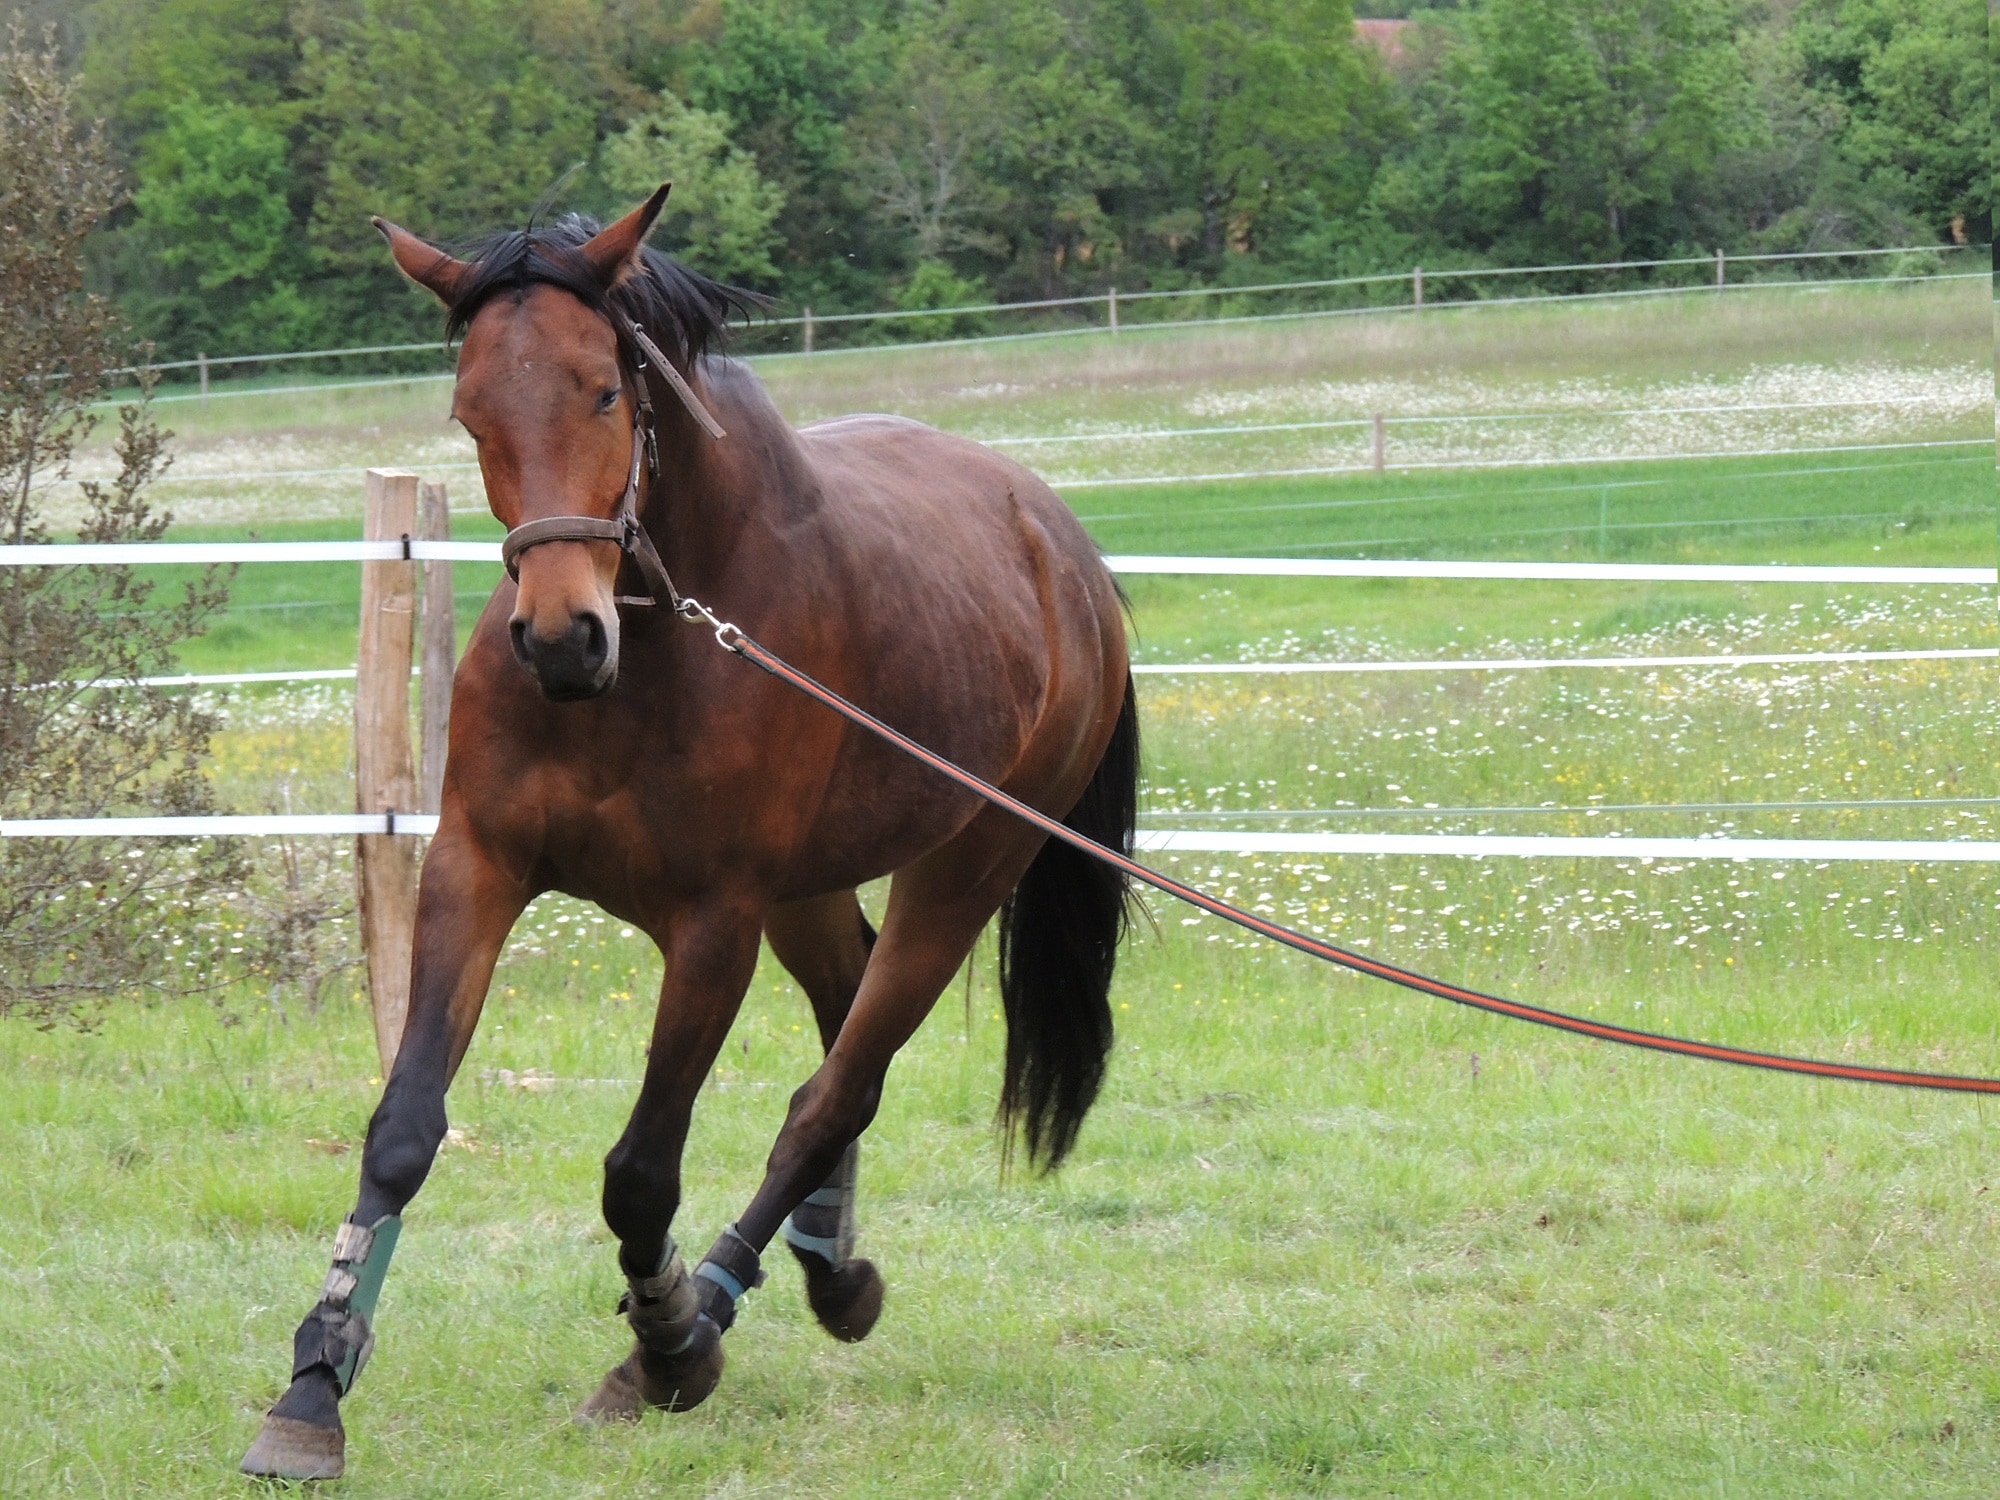 Animals, Horseback Riding, Horse, Sport, horse, domestic animals